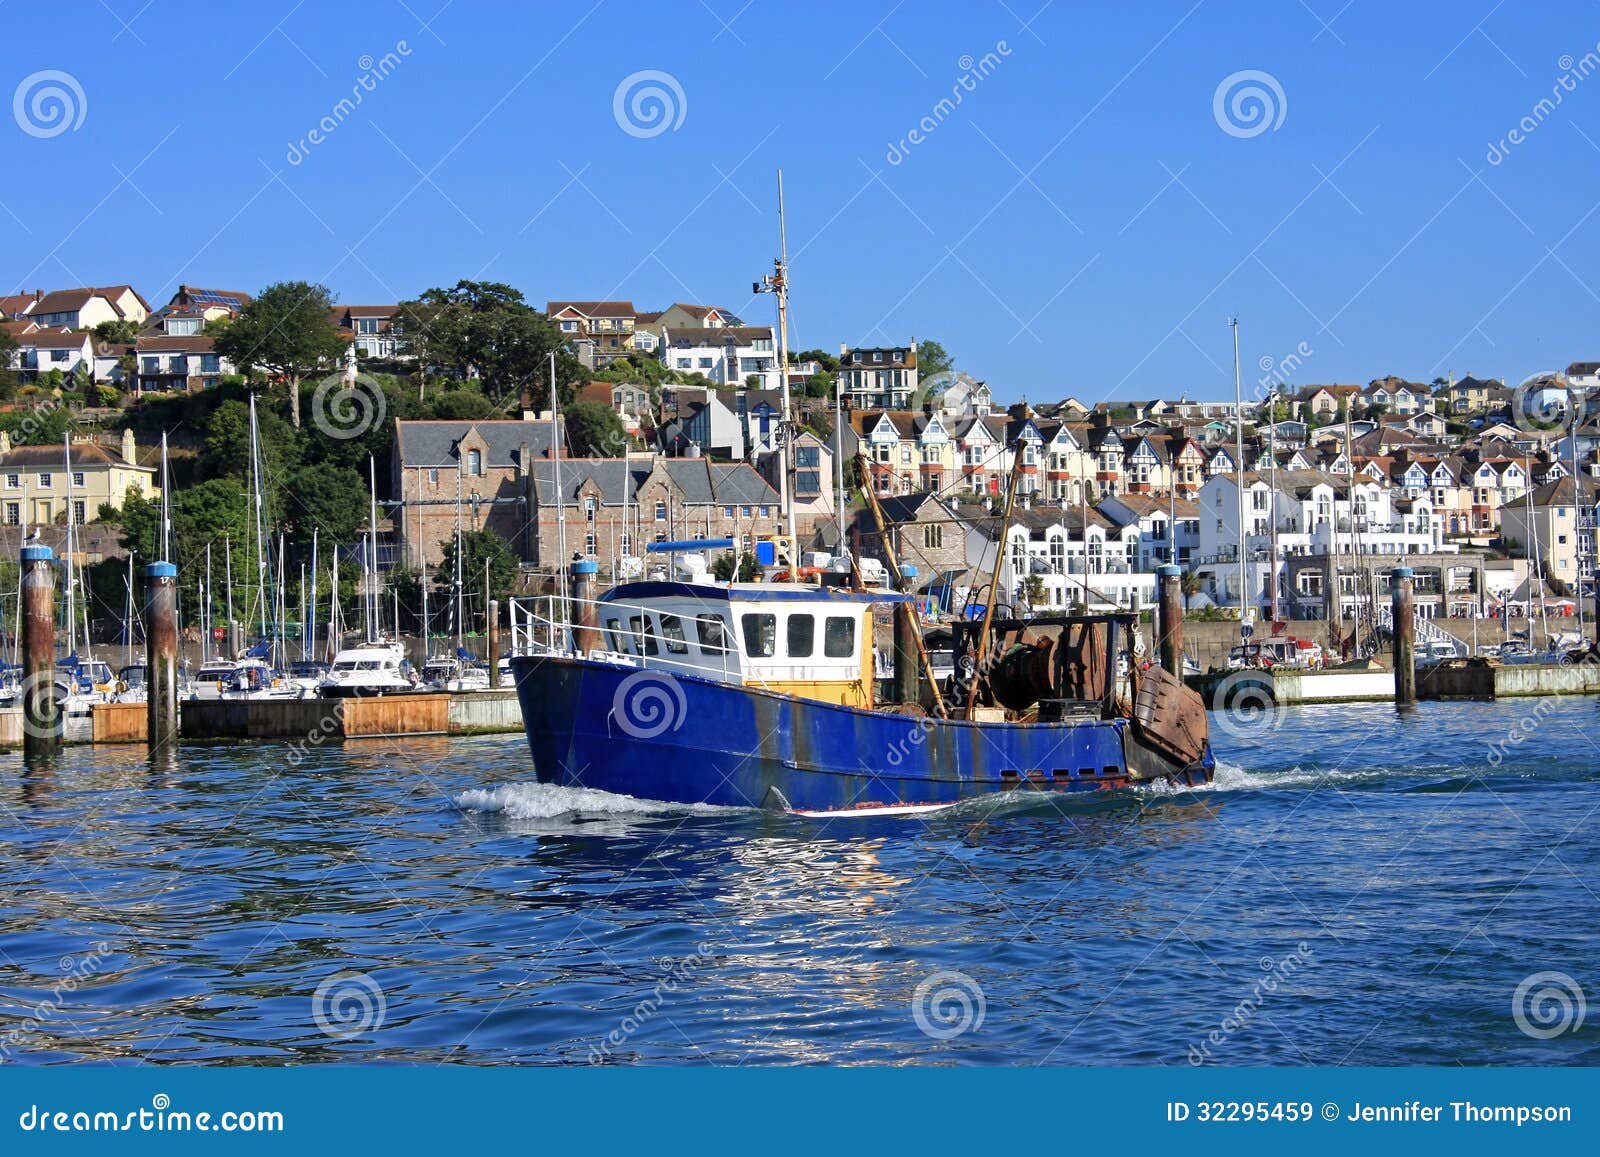 Fishing Boat Royalty Free Stock Images - Image: 32295459